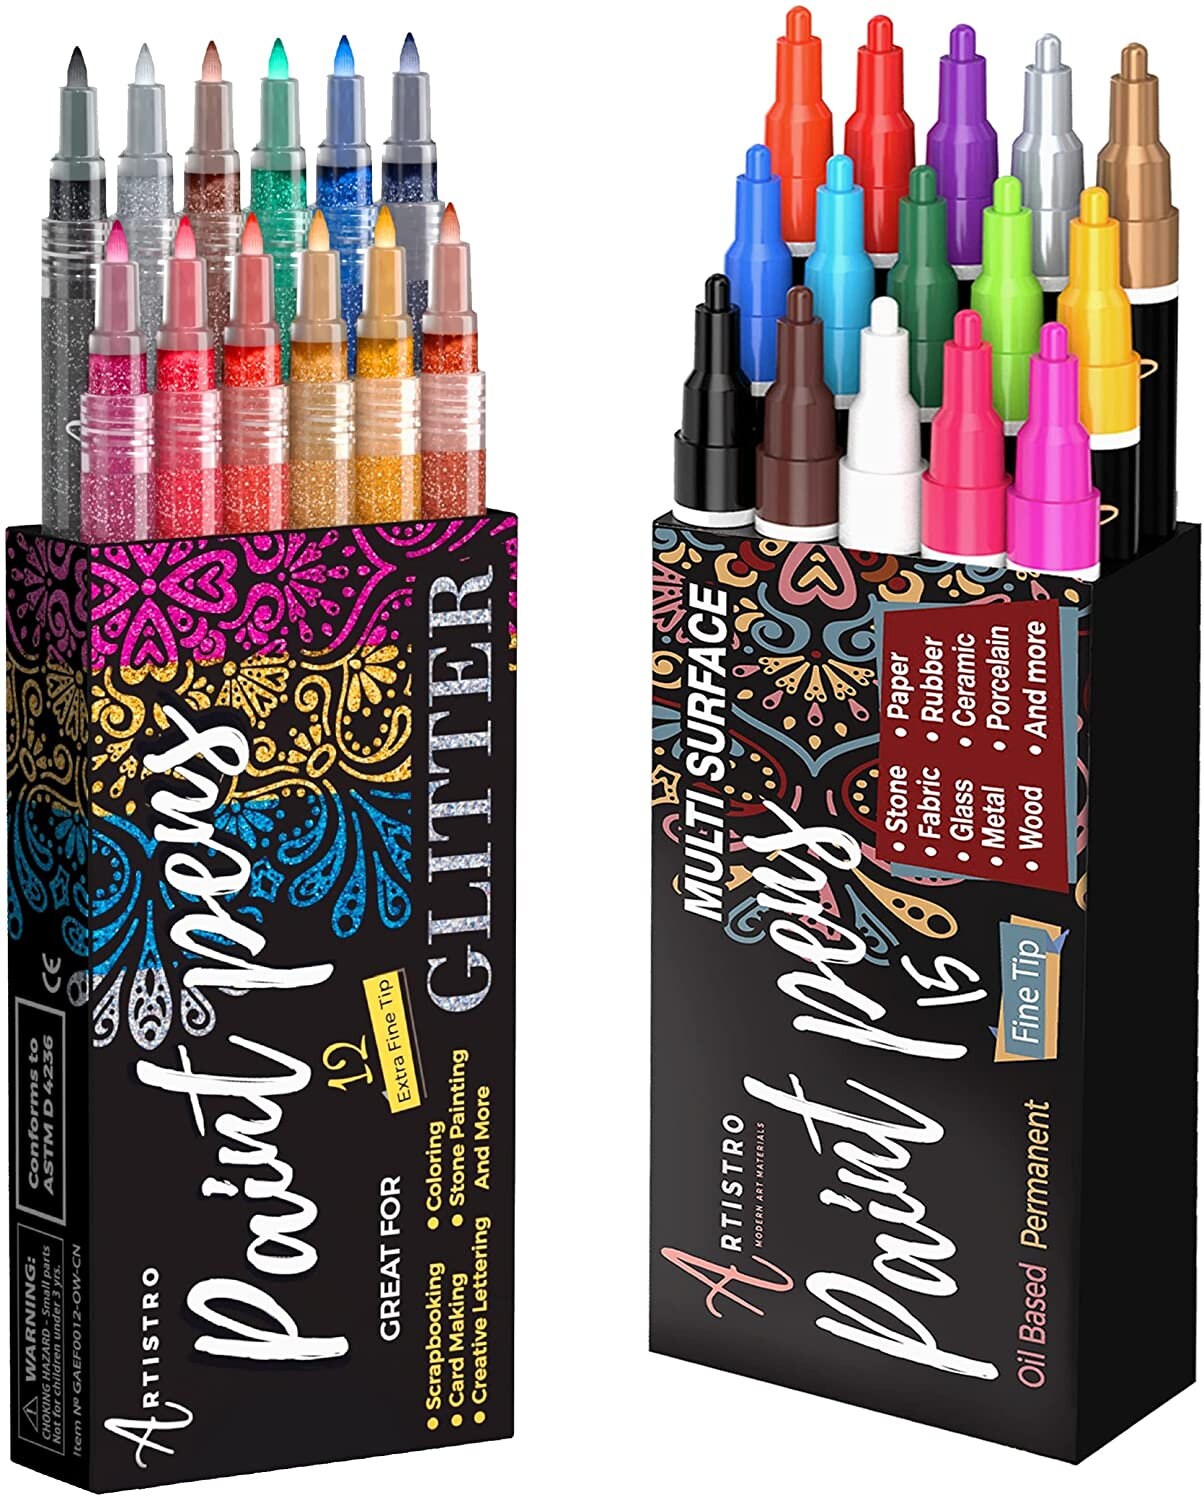 PINTAR Oil Based Paint Pens - 20 Medium Tip & 4 Fine Tip Colored